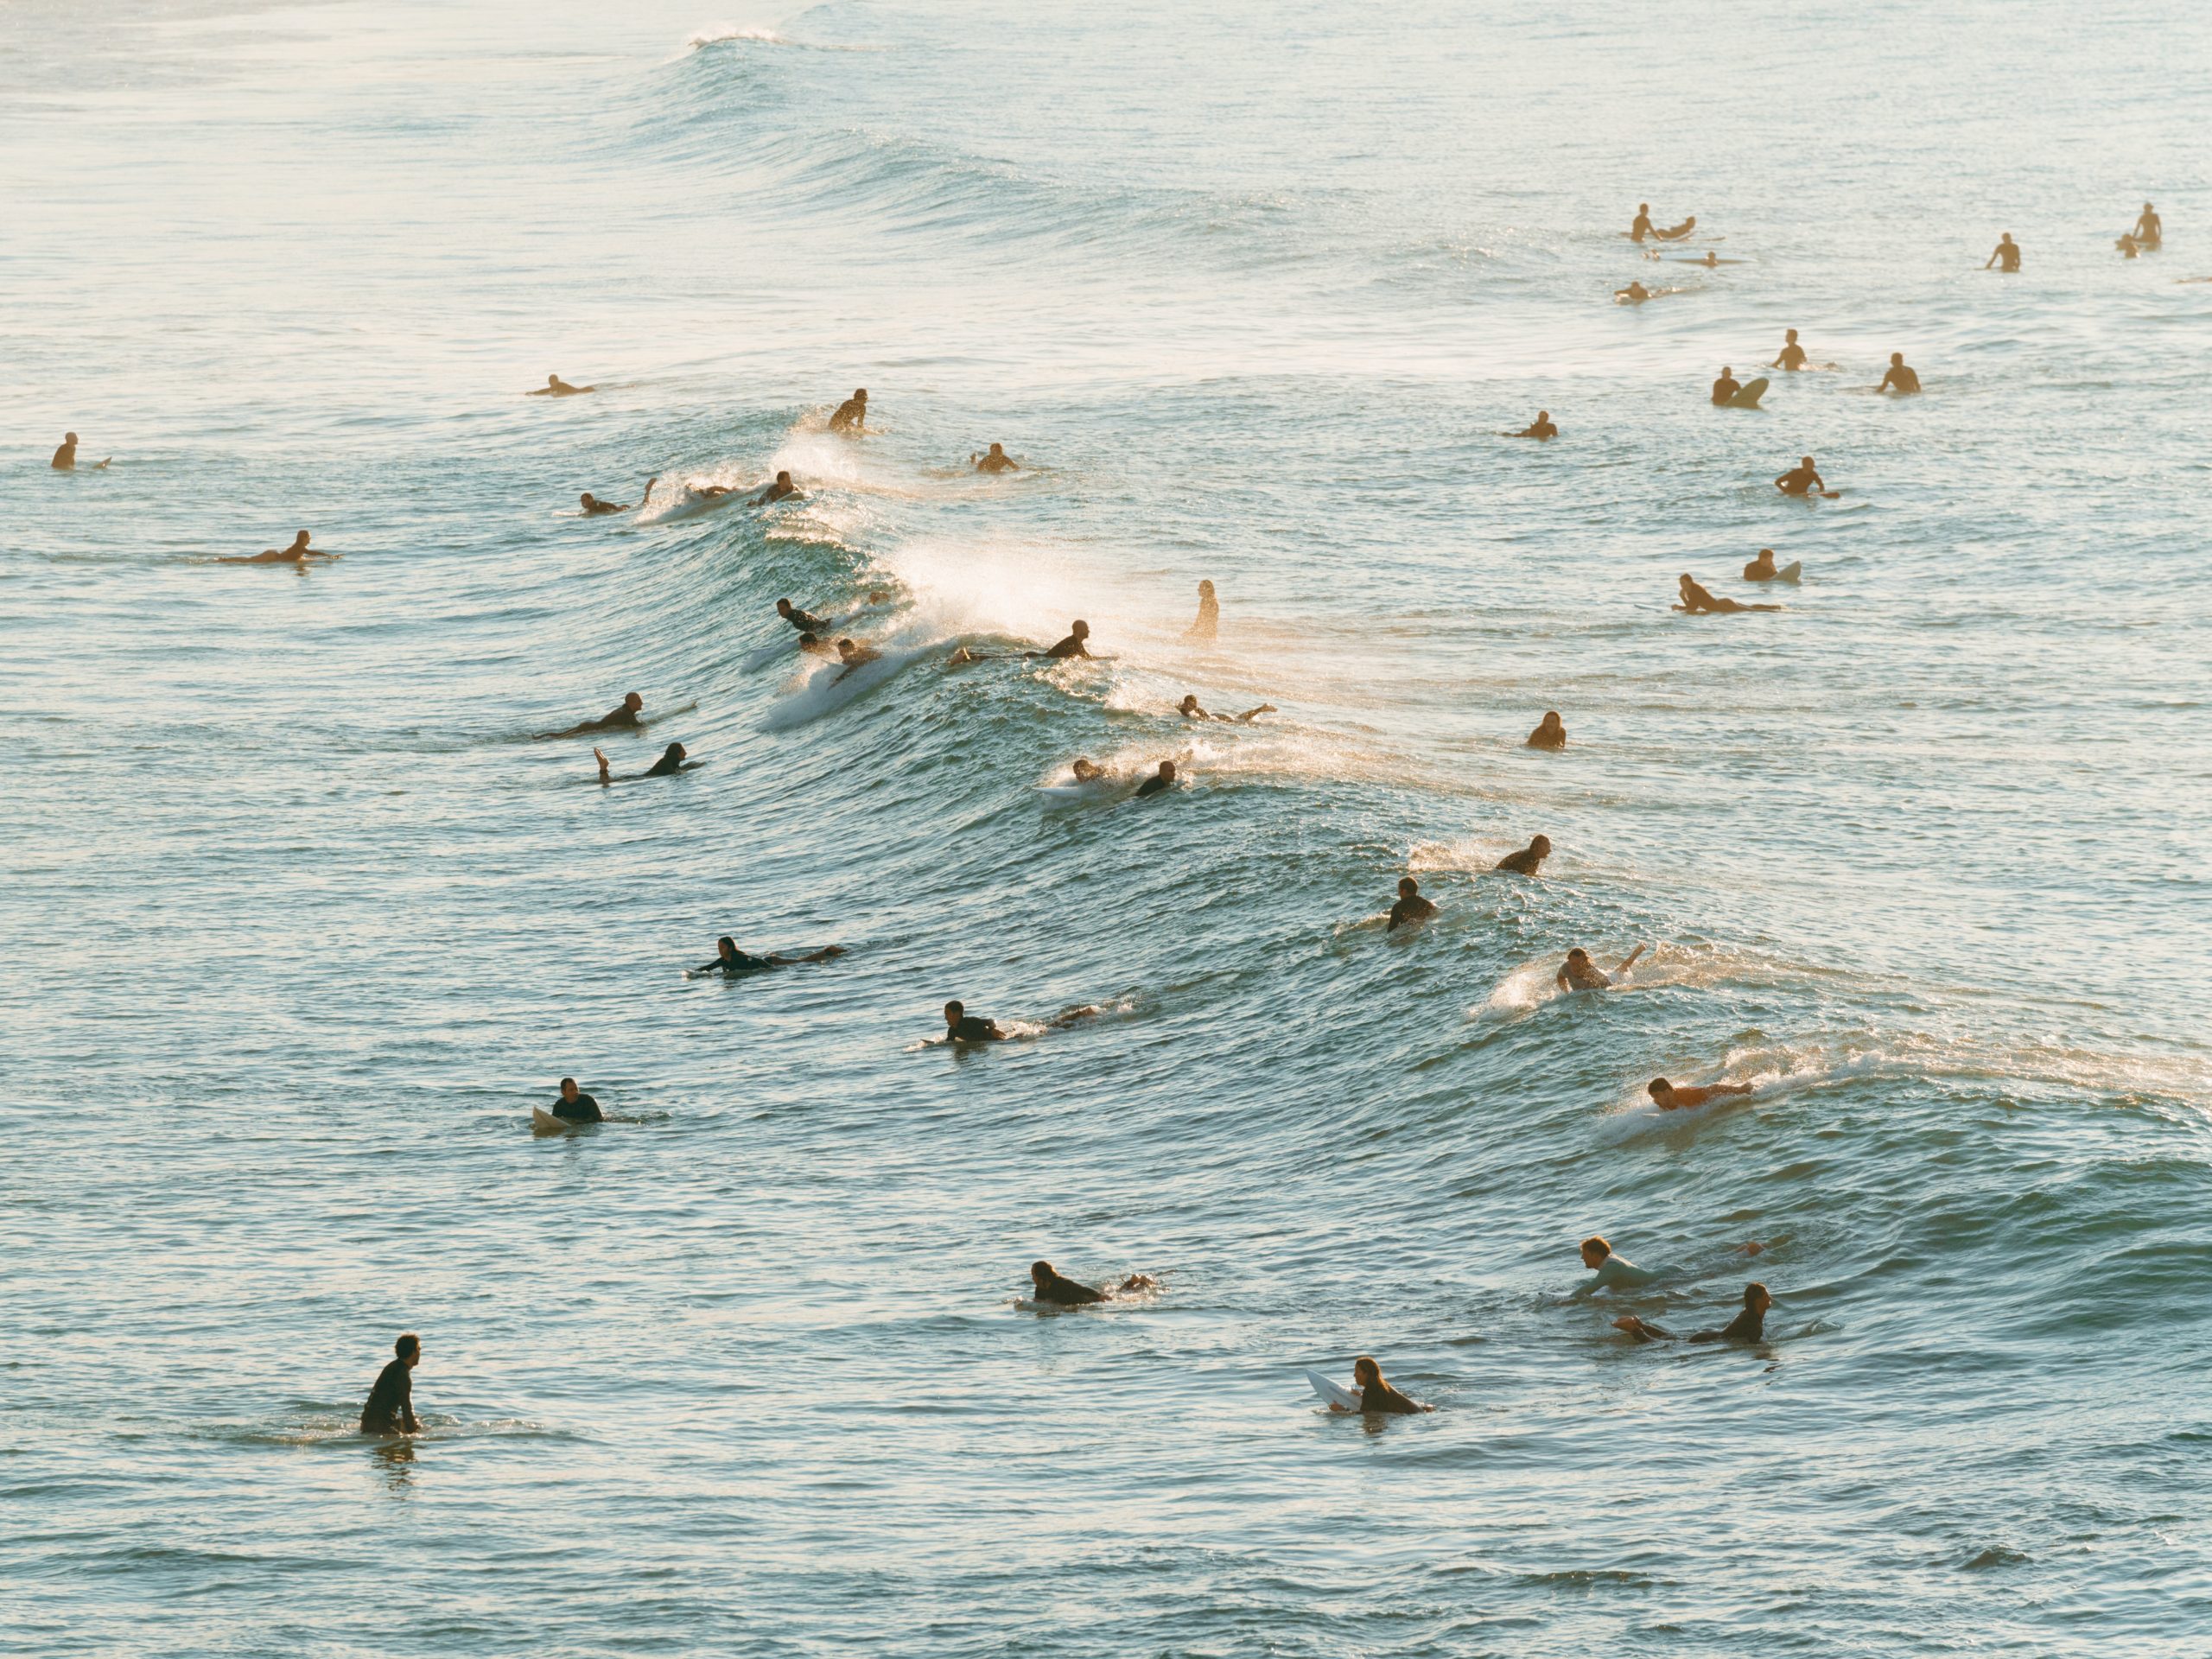 Surfers in the ocean